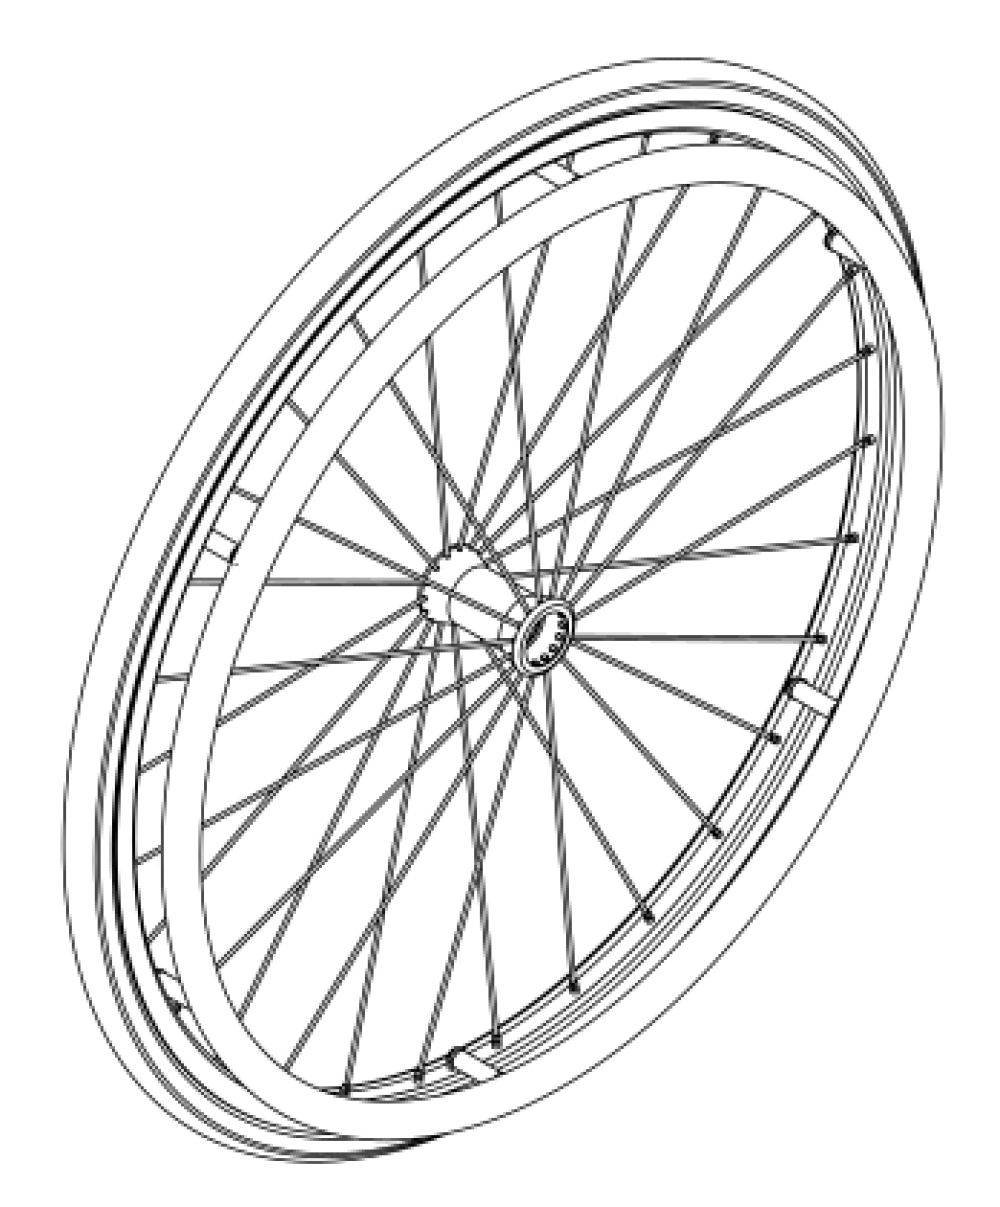 (discontinued) Little Wave Spoke Wheel / Tire / Handrim Kits parts diagram